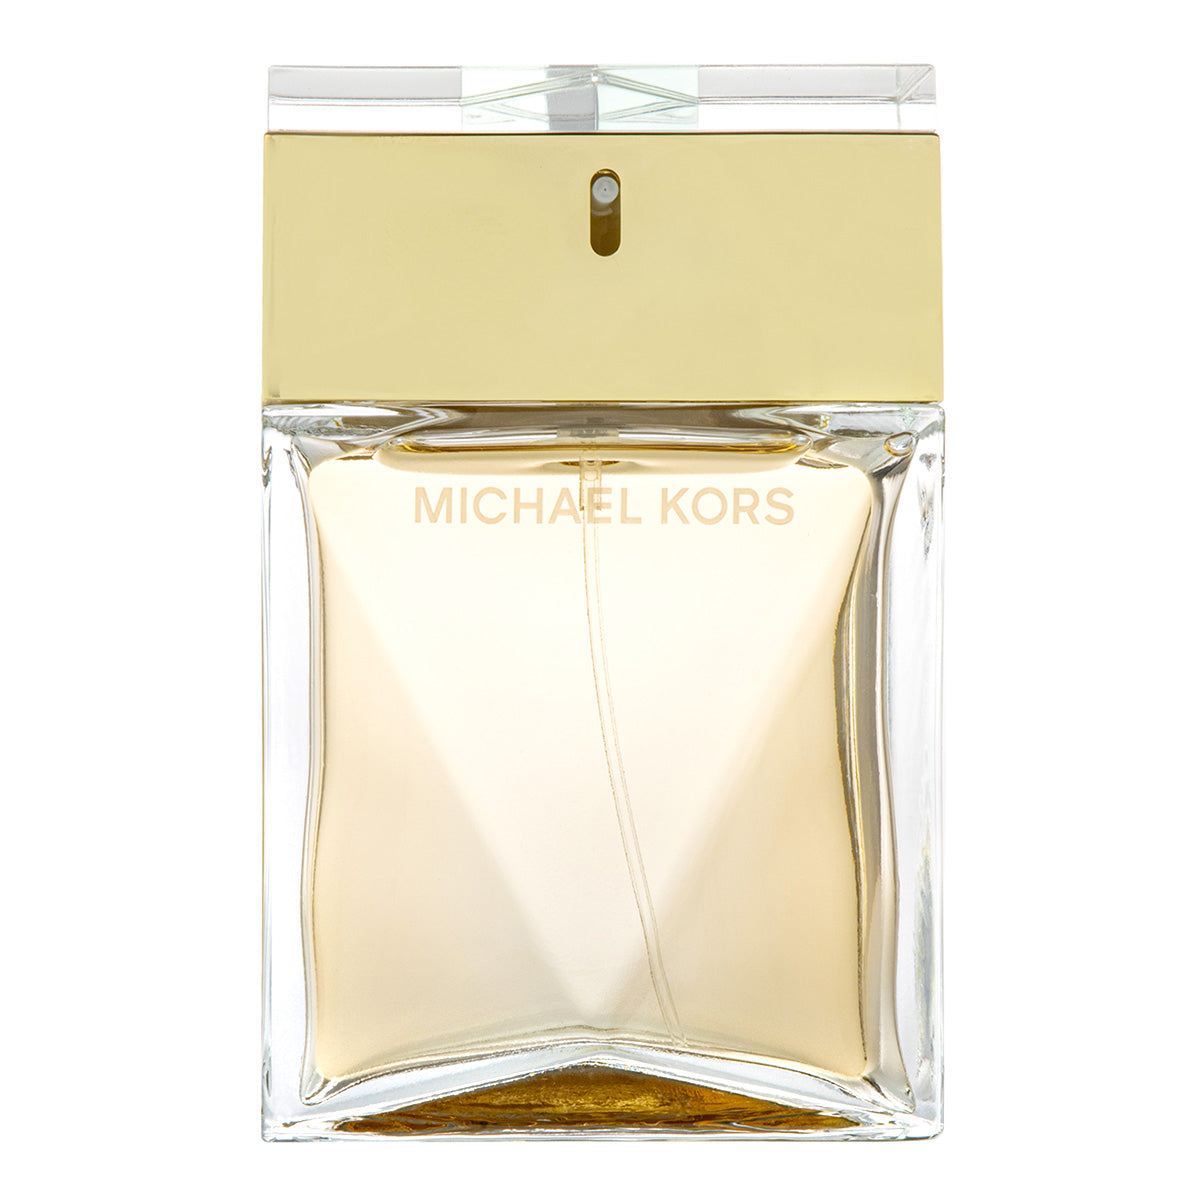 Michael Kors Gold Luxe Edition Eau De Parfum Spray 50ml - Feel Gorgeous